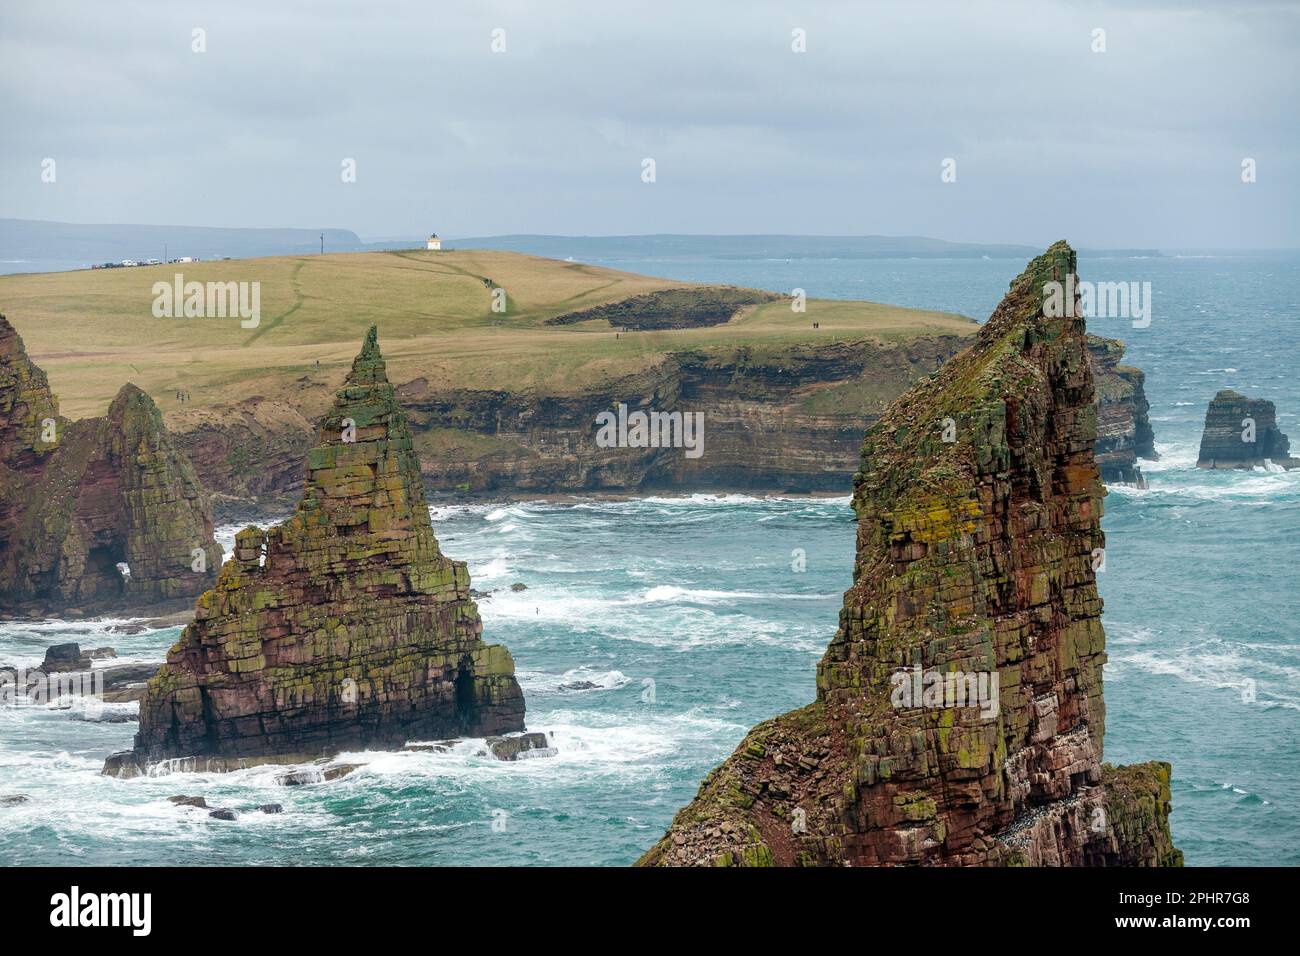 Die Stacks of Duncansby. Duncansby Sea Stacks in der Nähe von John O Groats, Schottland Stockfoto